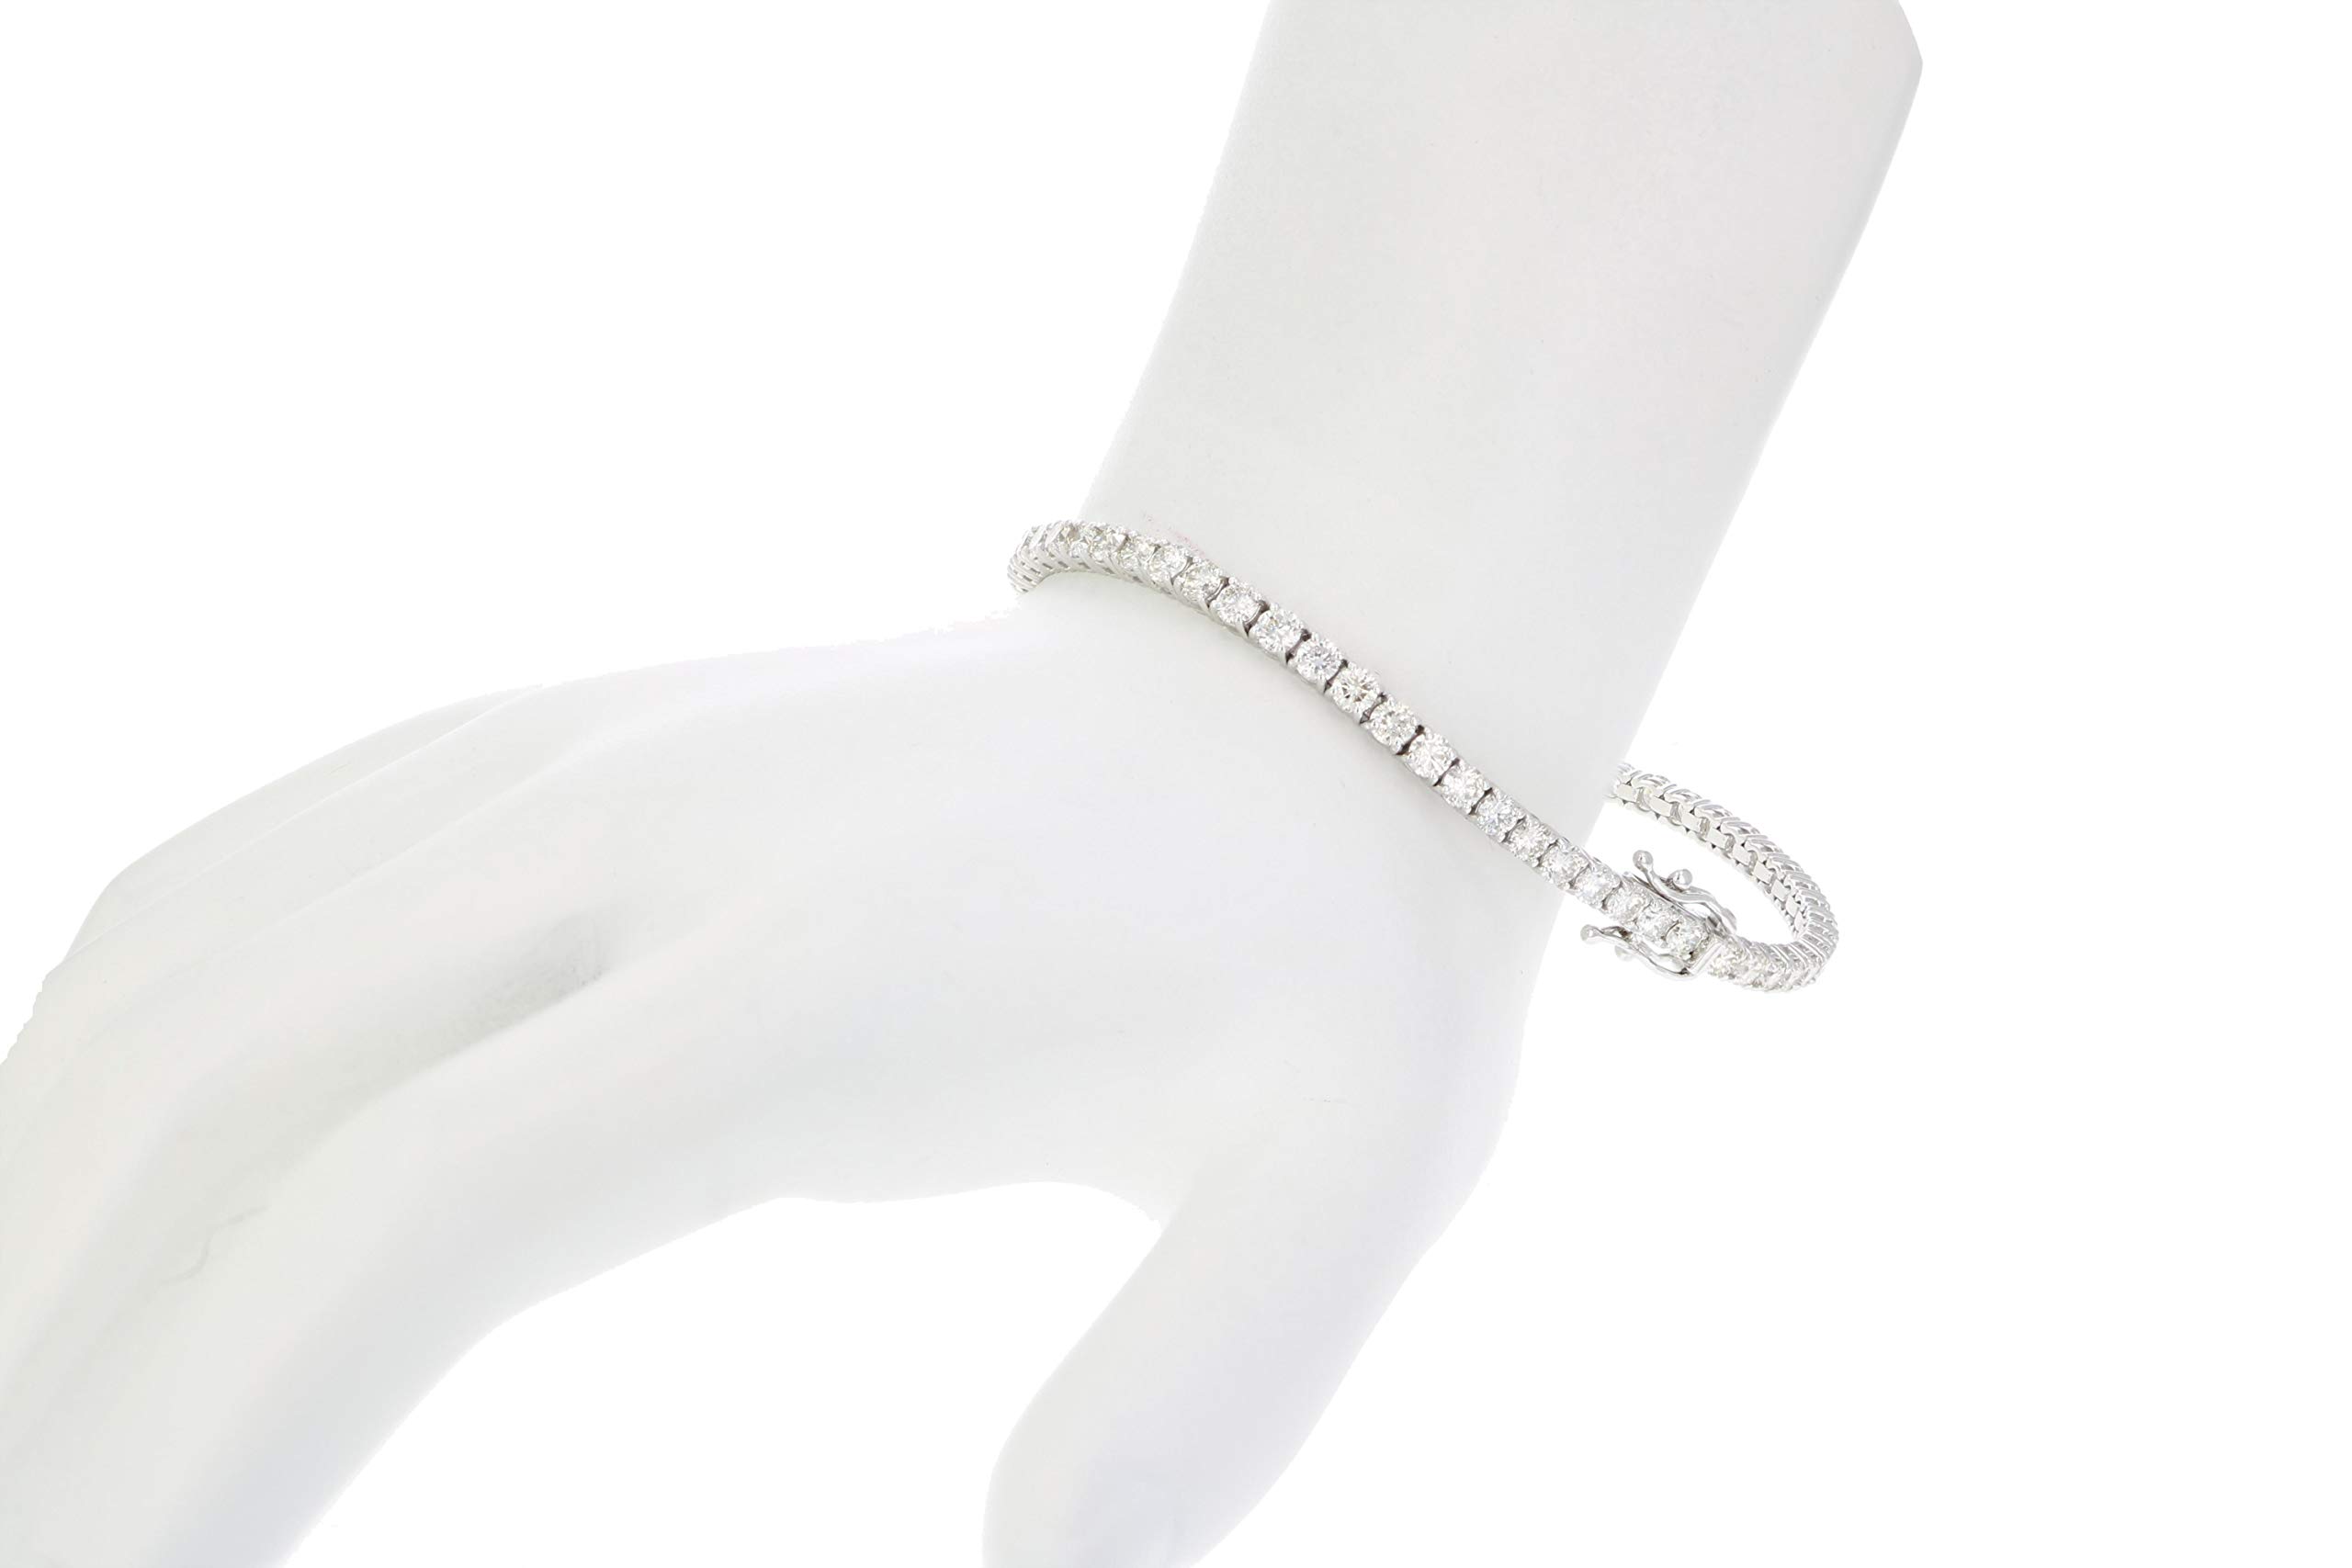 VIR JEWELS 4 to 11 cttw Certified Classic Diamond Bracelet 14K White Gold I1-I2 Clarity